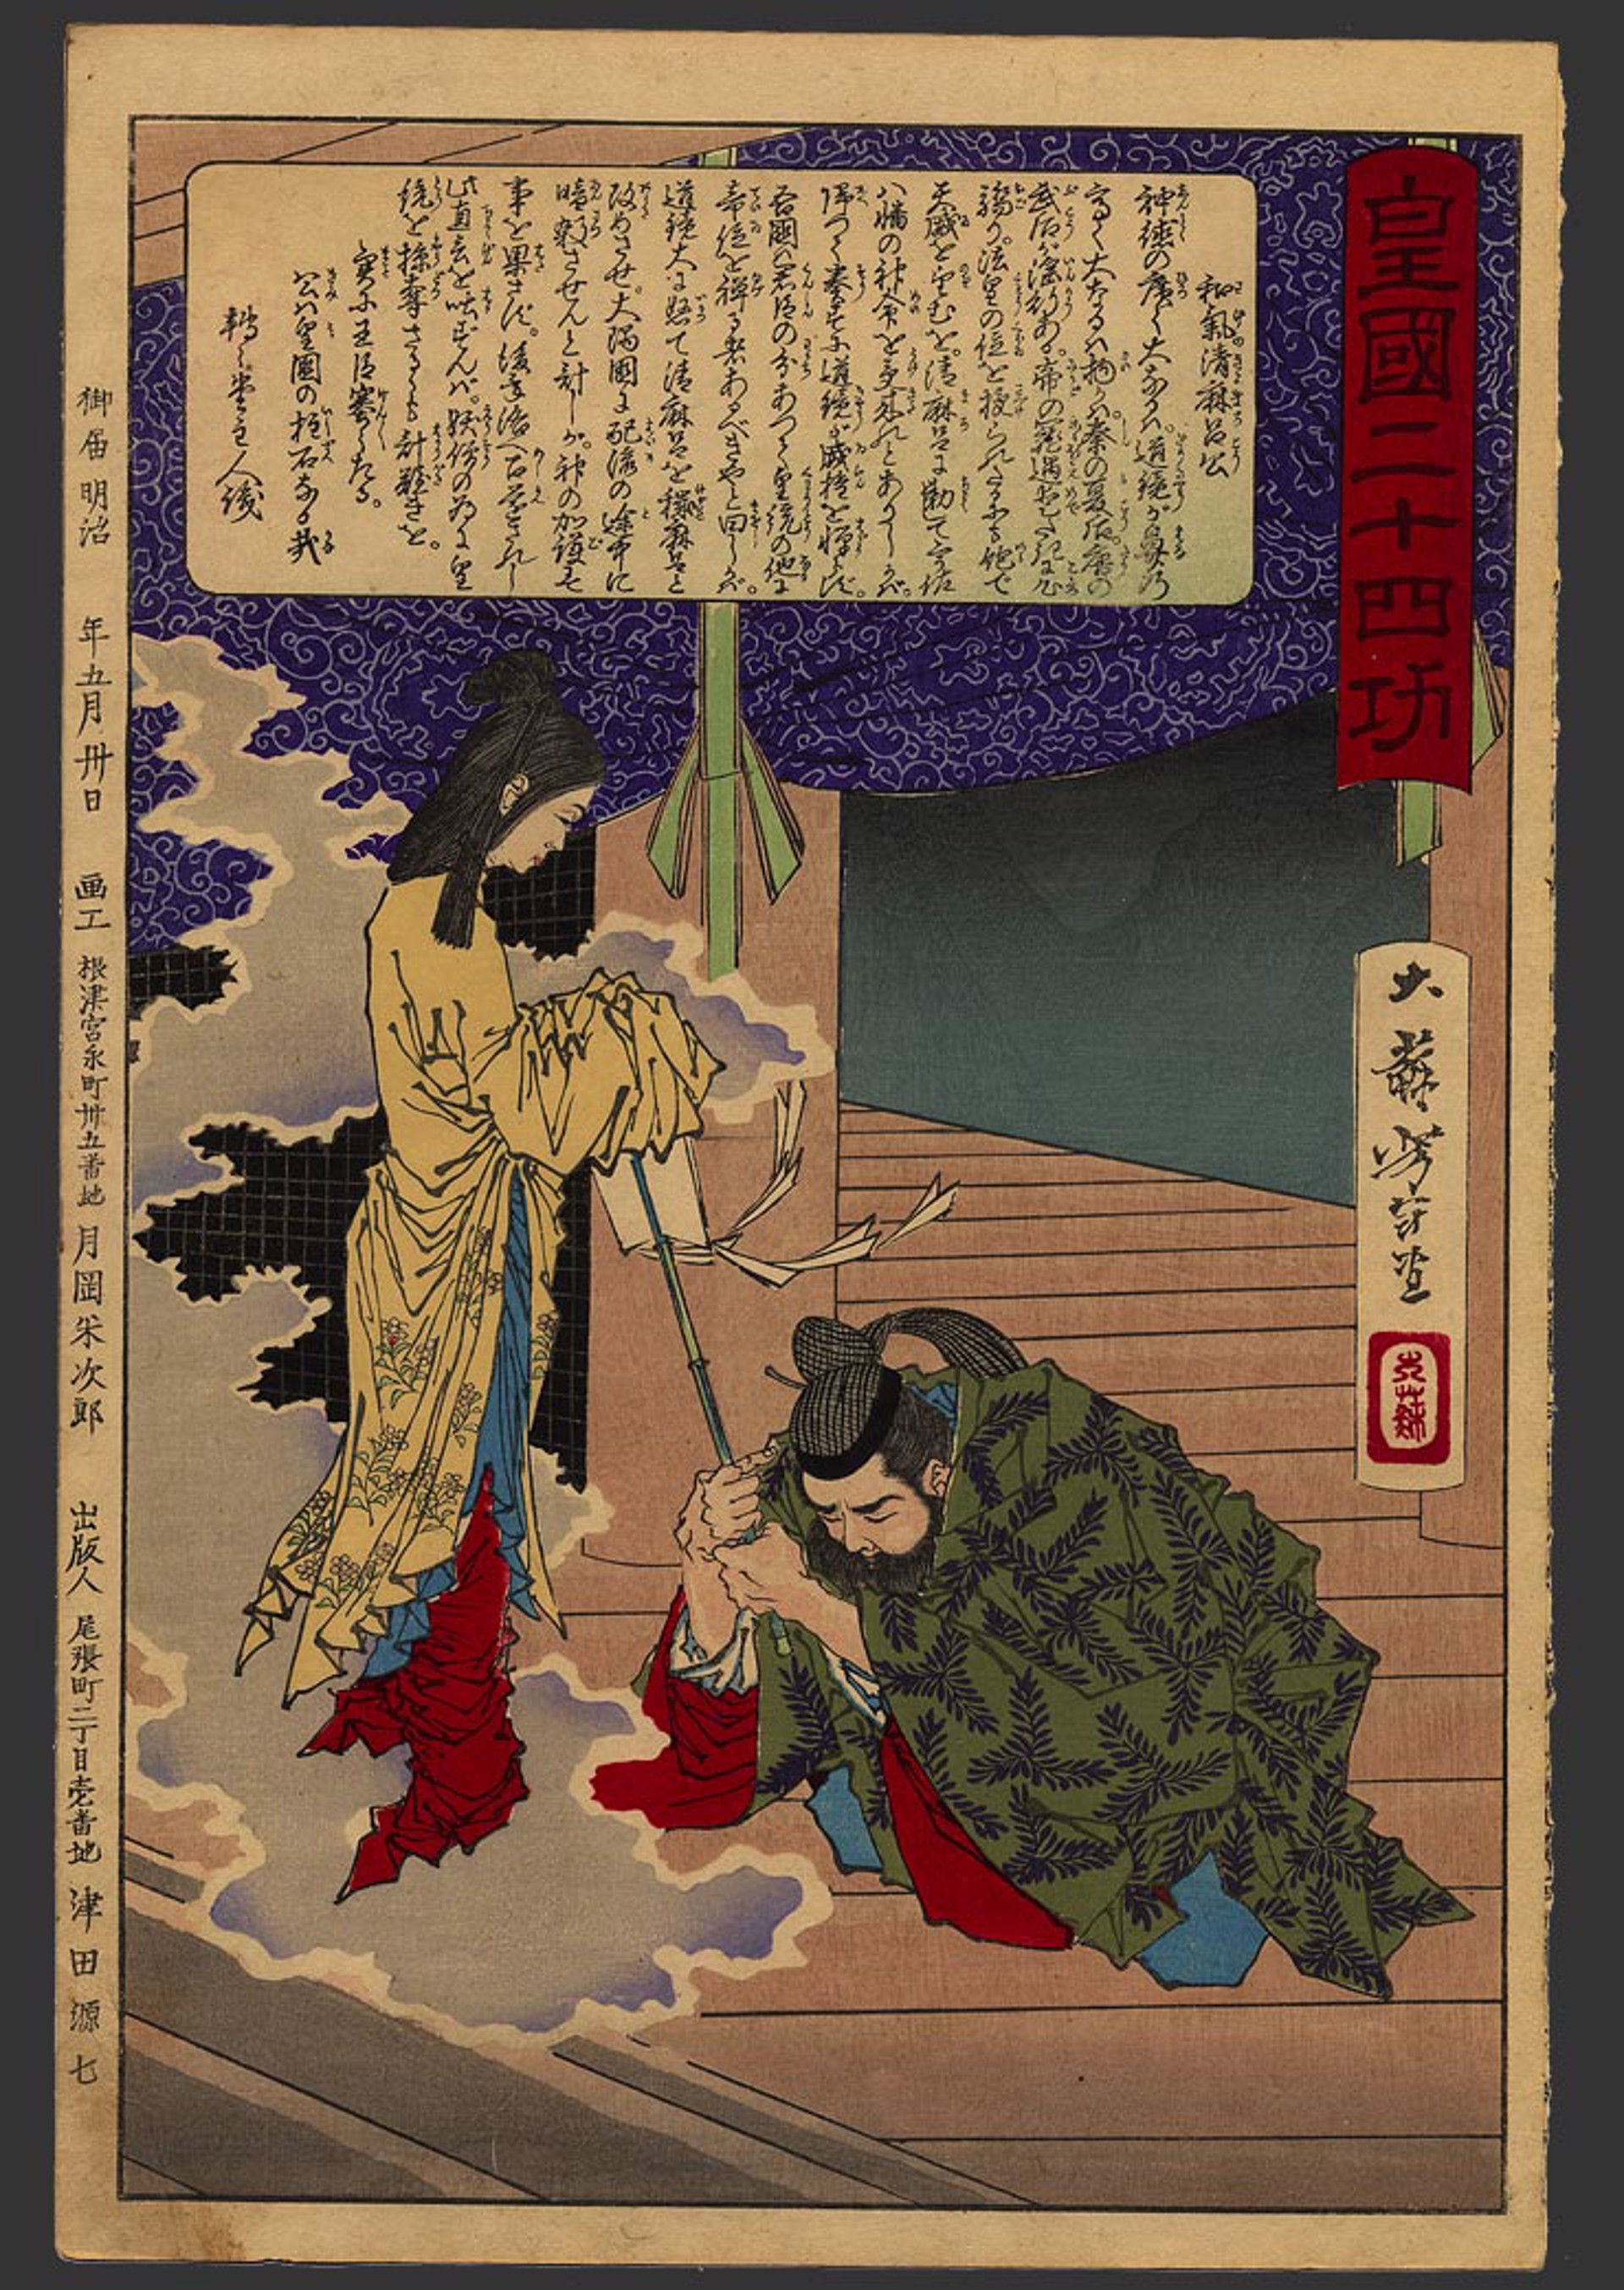 #1 Waka no Kiyomaro (733-99) 24 Accomplishments in Imperial Japan by Yoshitoshi